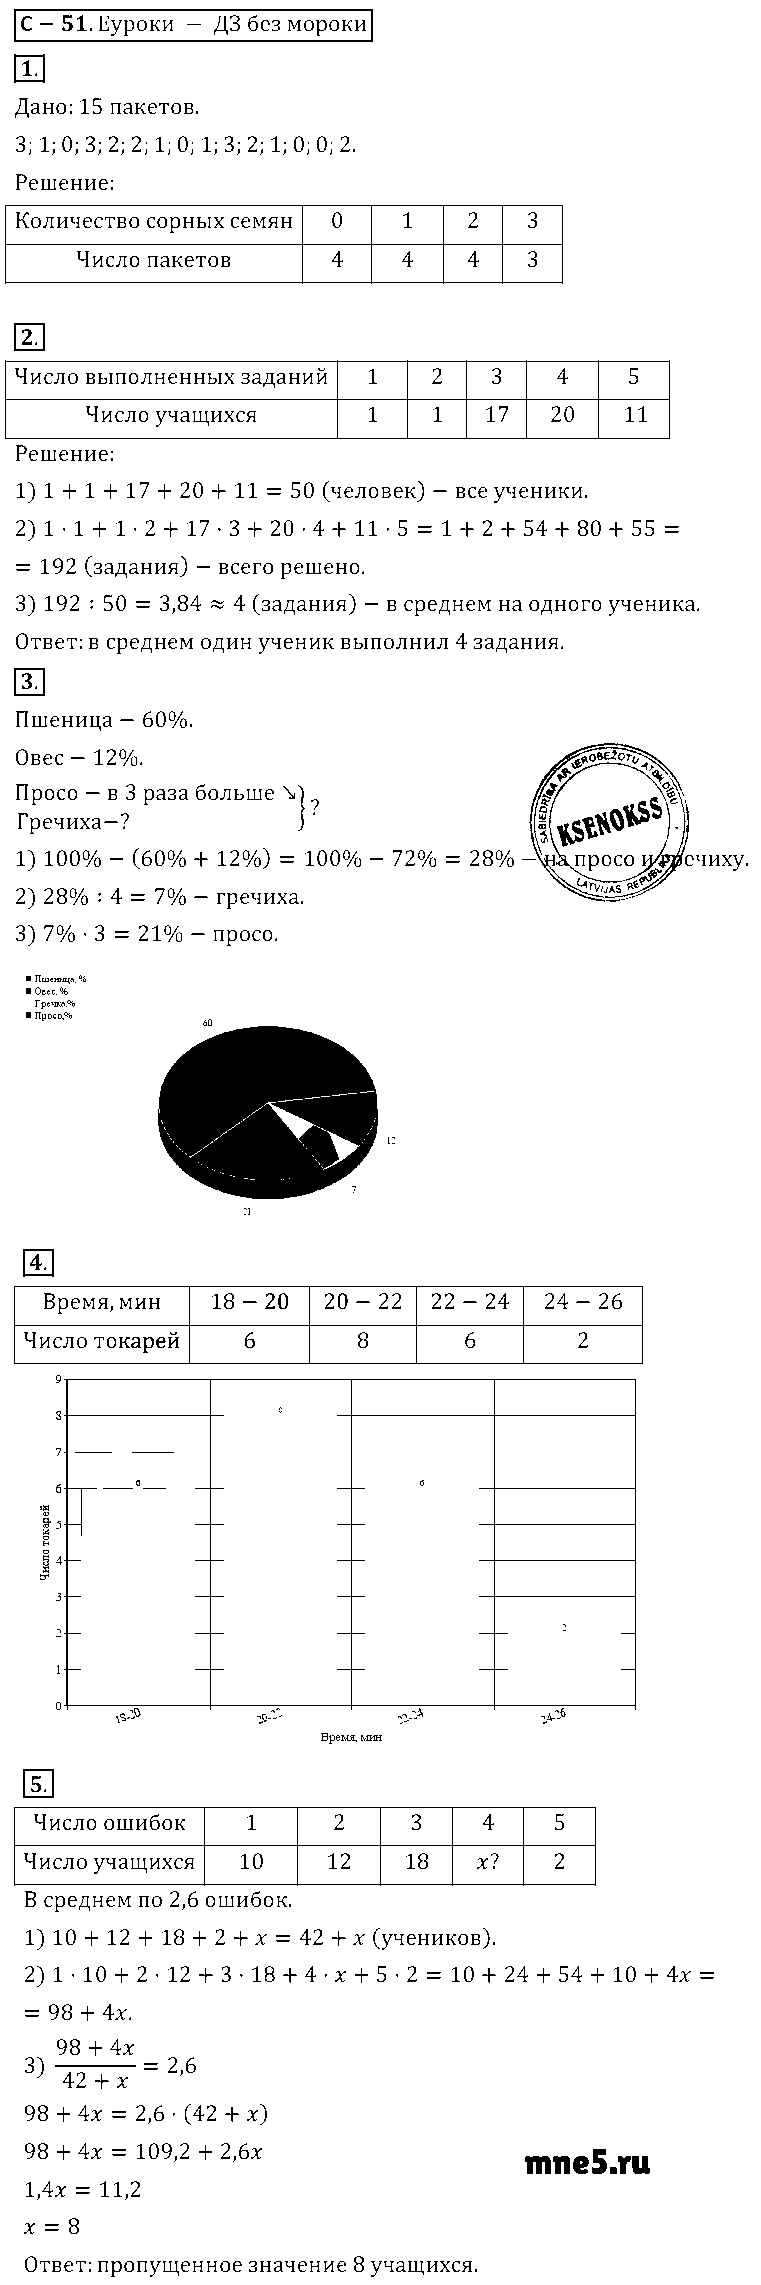 ГДЗ Алгебра 8 класс - С-47(51). Элементы статистики